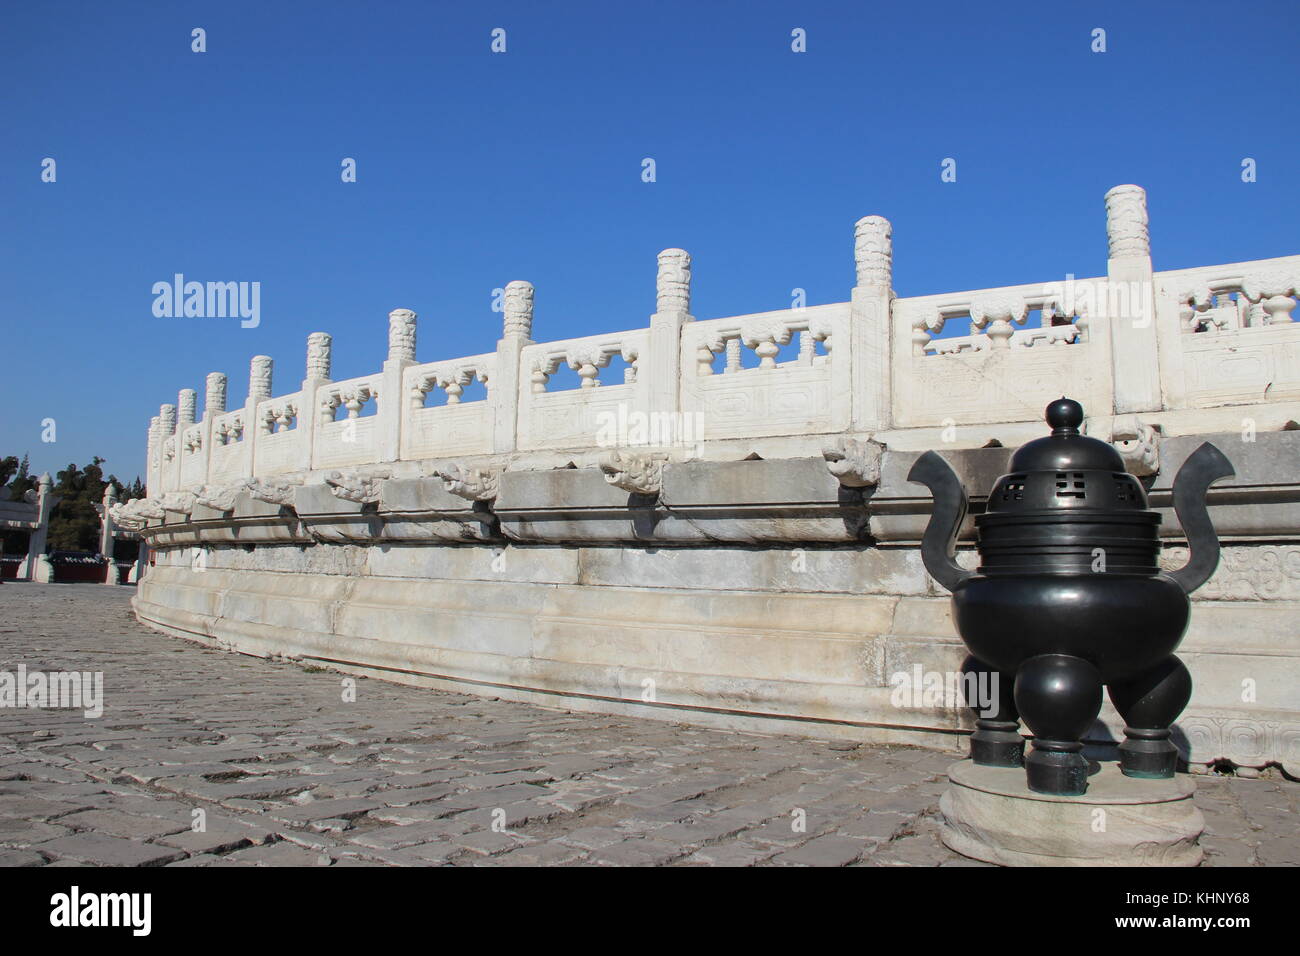 Temple of Heaven - Beijing, China Stock Photo